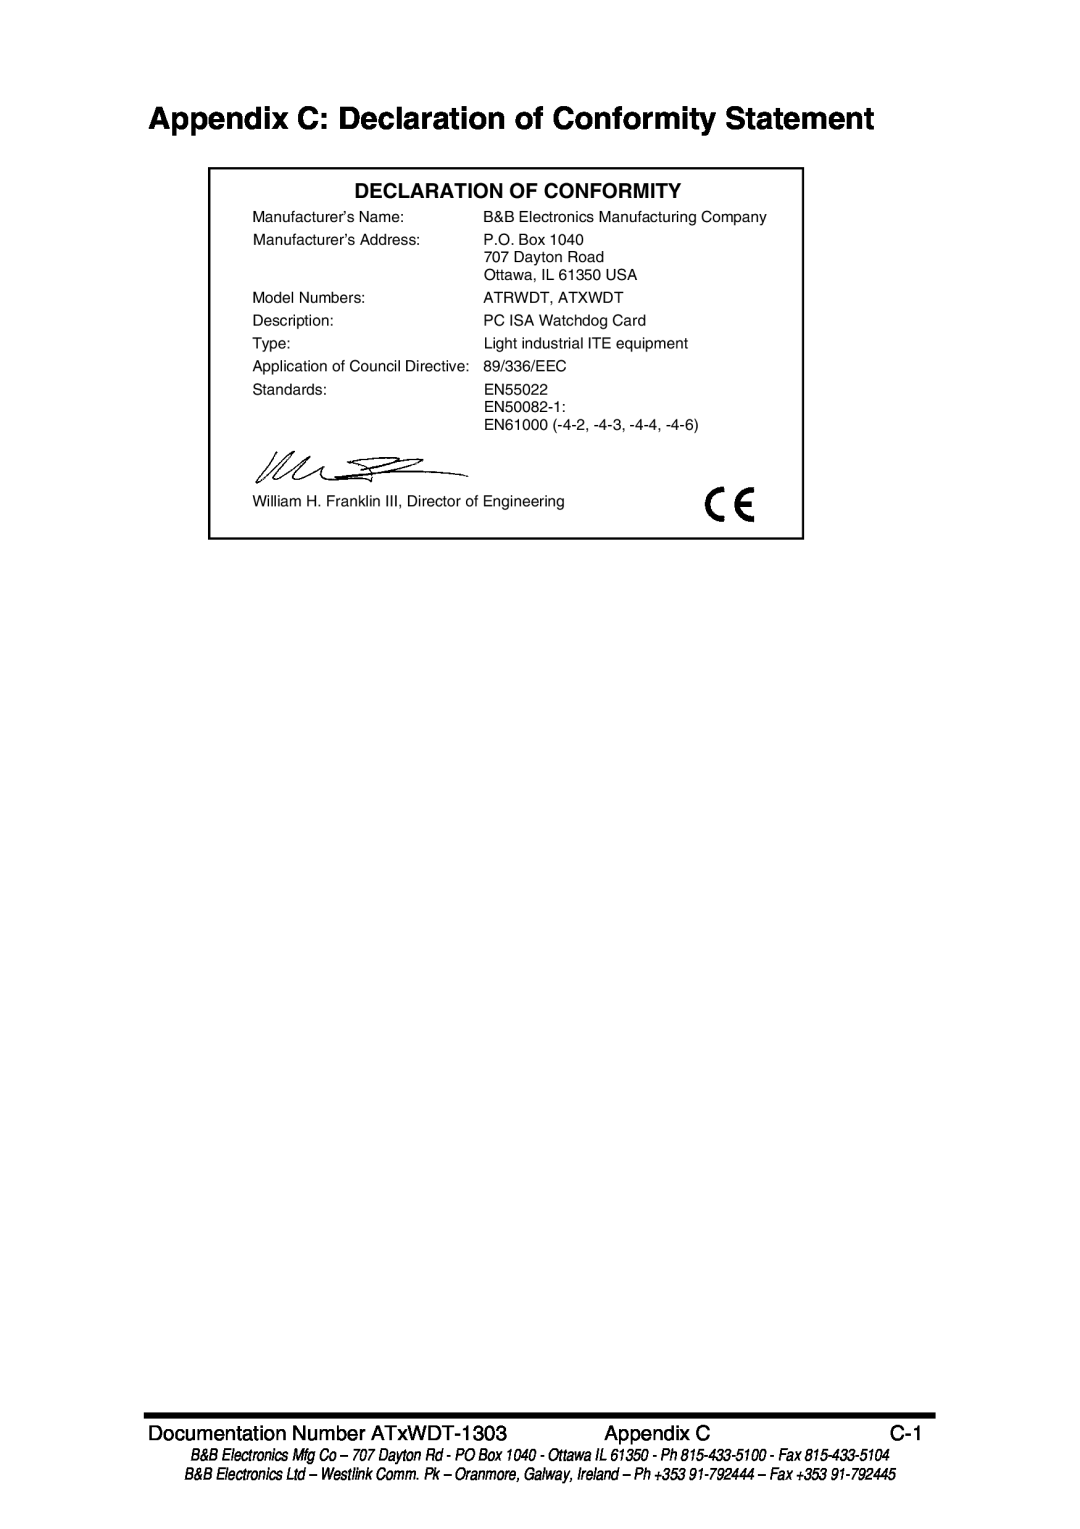 B&B Electronics ATRWDT, ATXWDT manual Appendix C Declaration of Conformity Statement, Declaration Of Conformity 